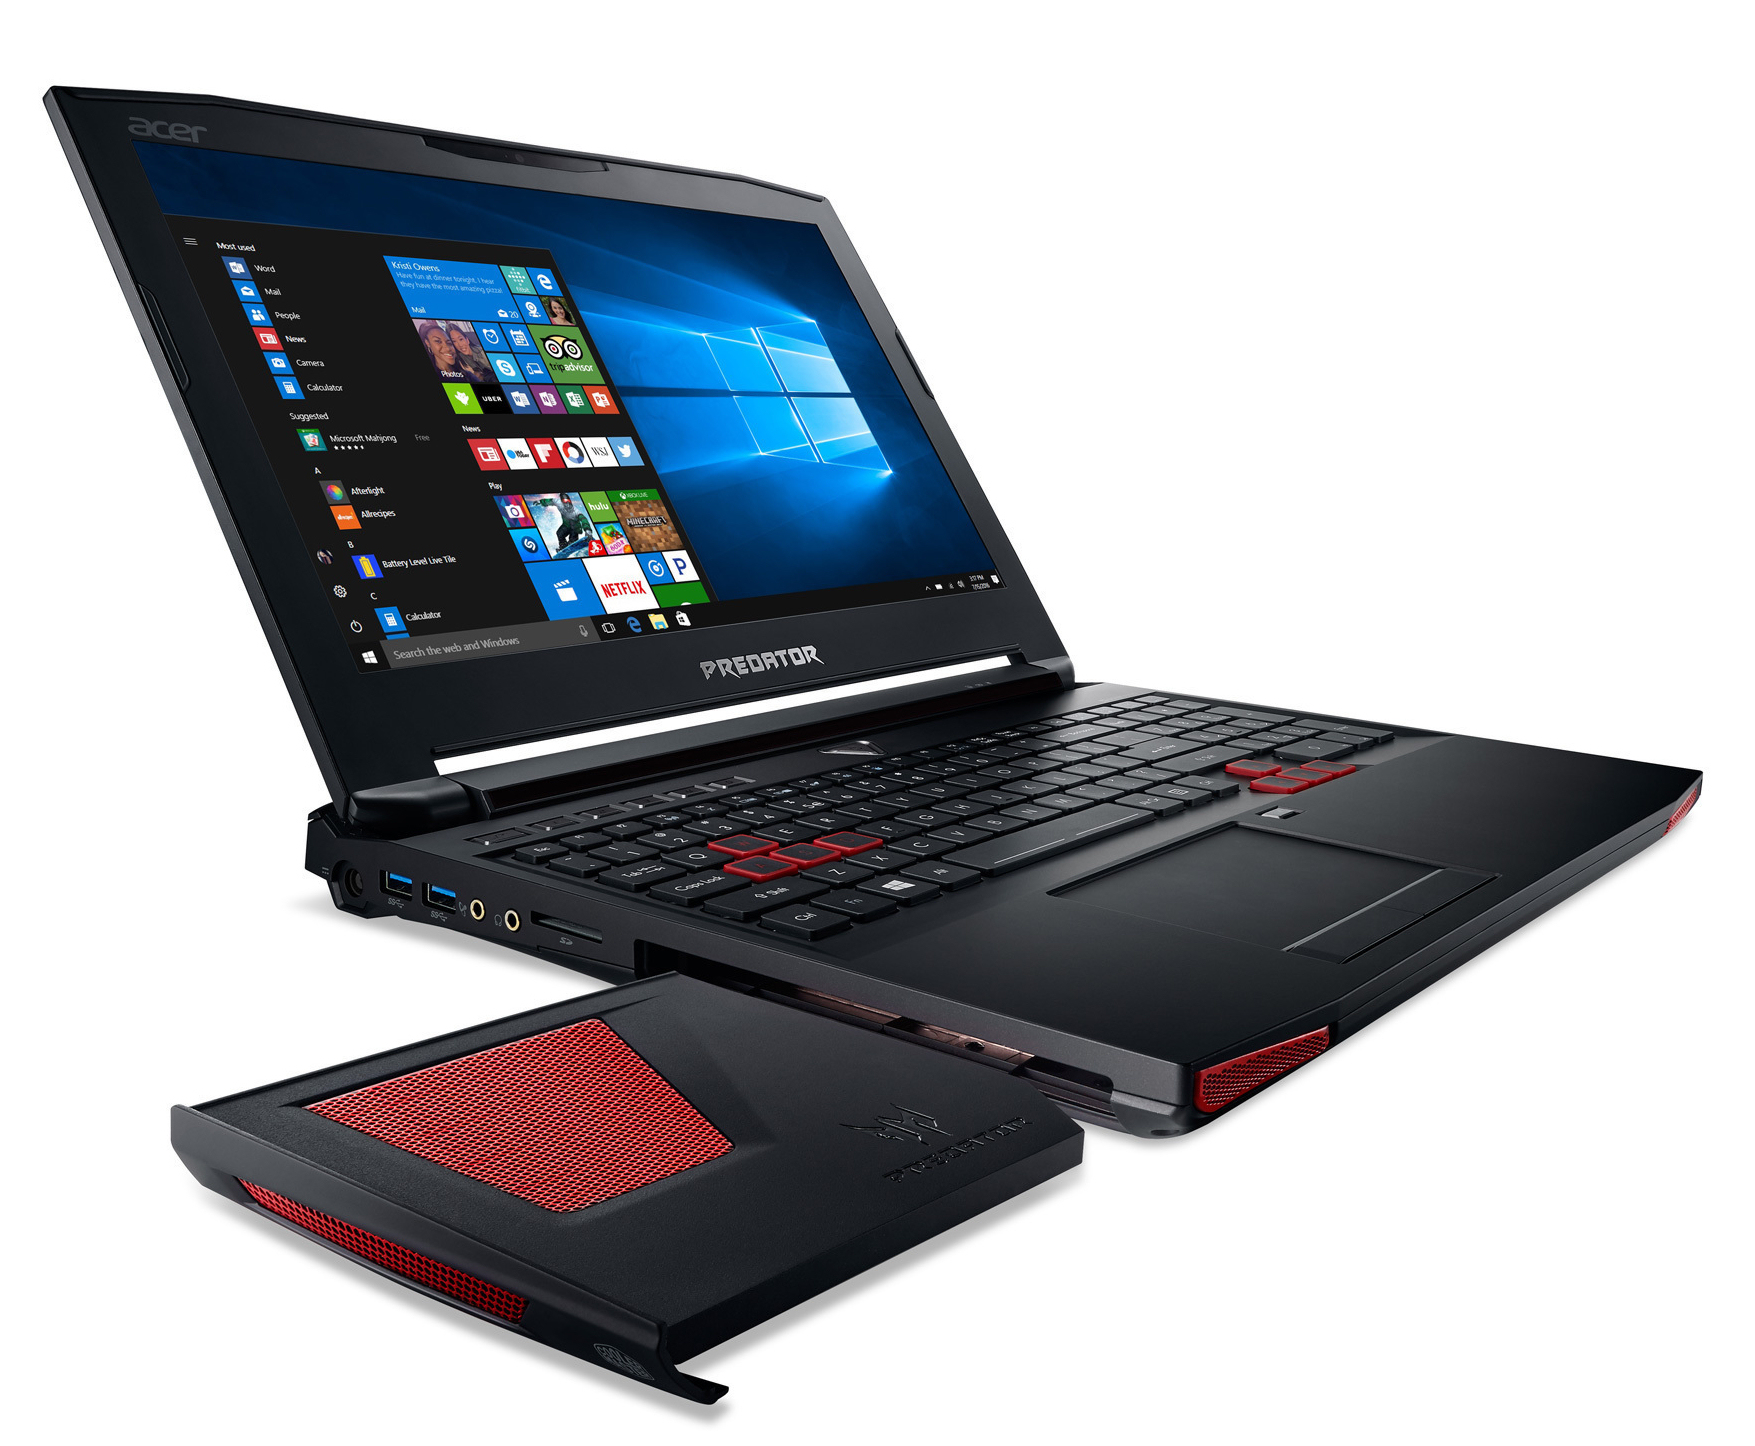 Acer Predator 15 (7700HQ, GTX 1070, Full HD) Laptop Review 